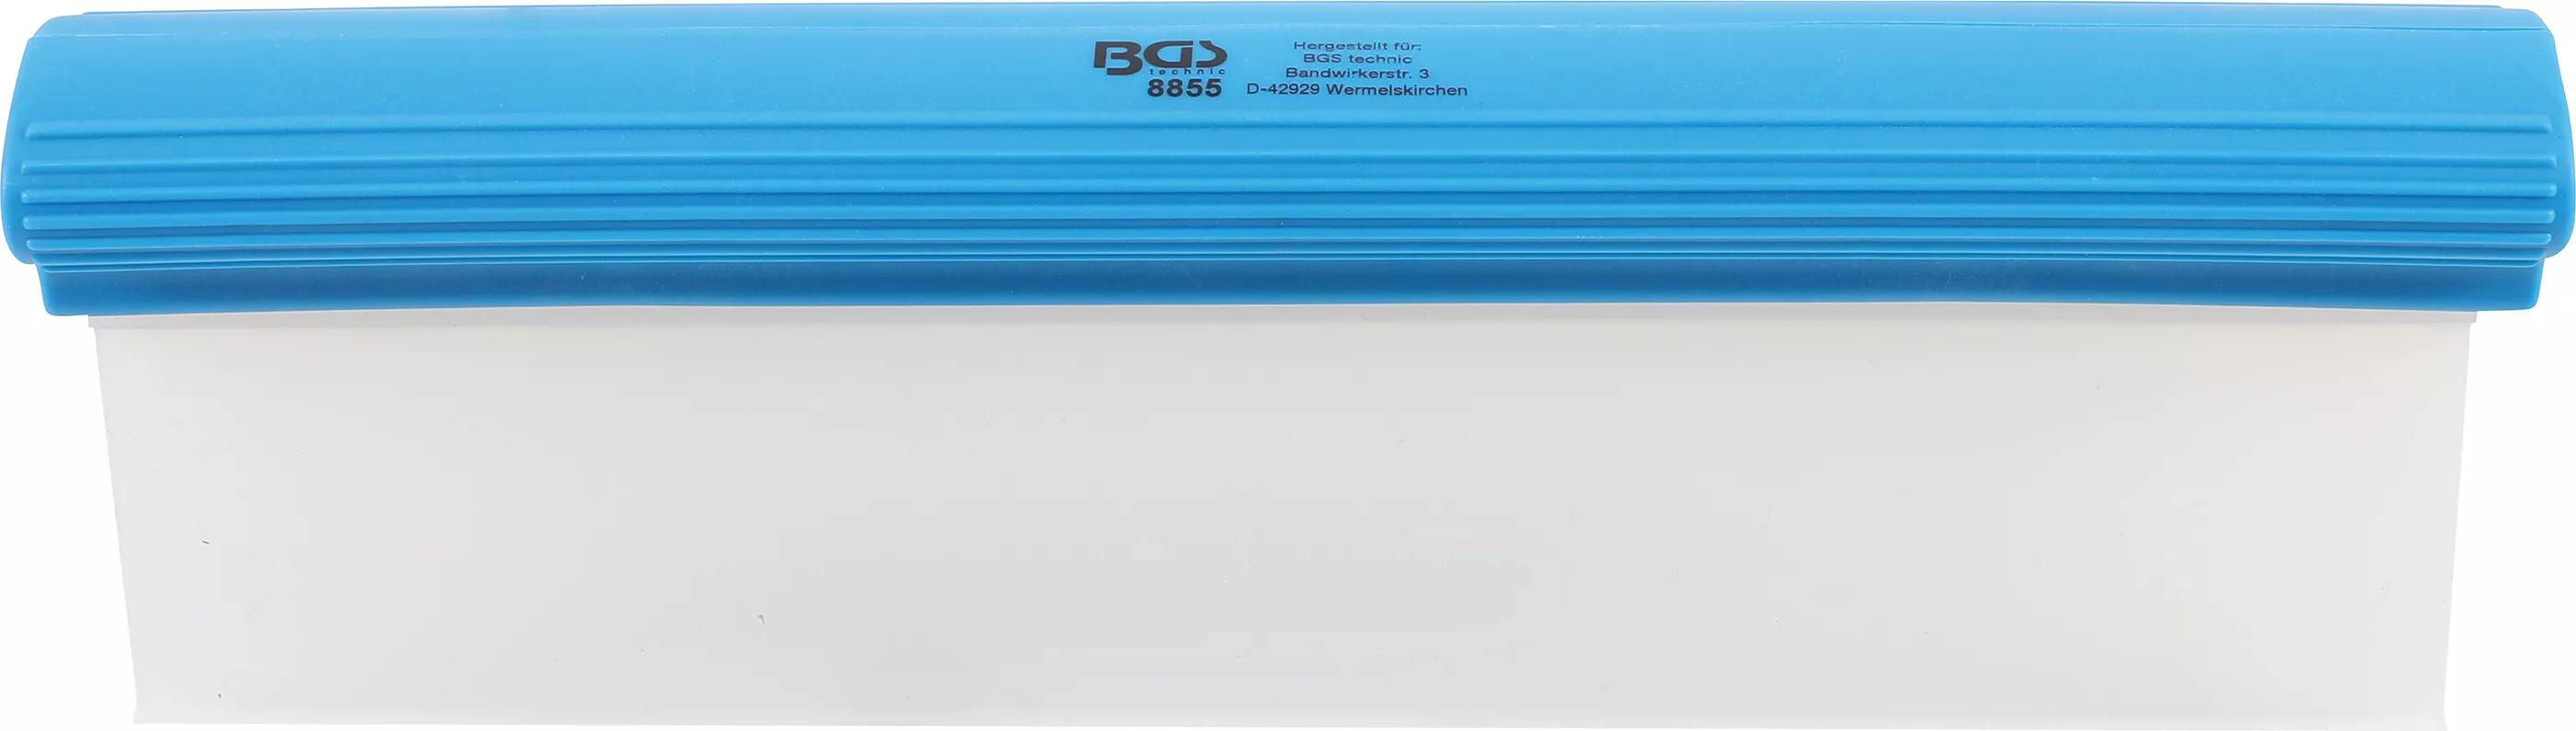 BGS Technic Silikon Wasserabzieher 300 mm